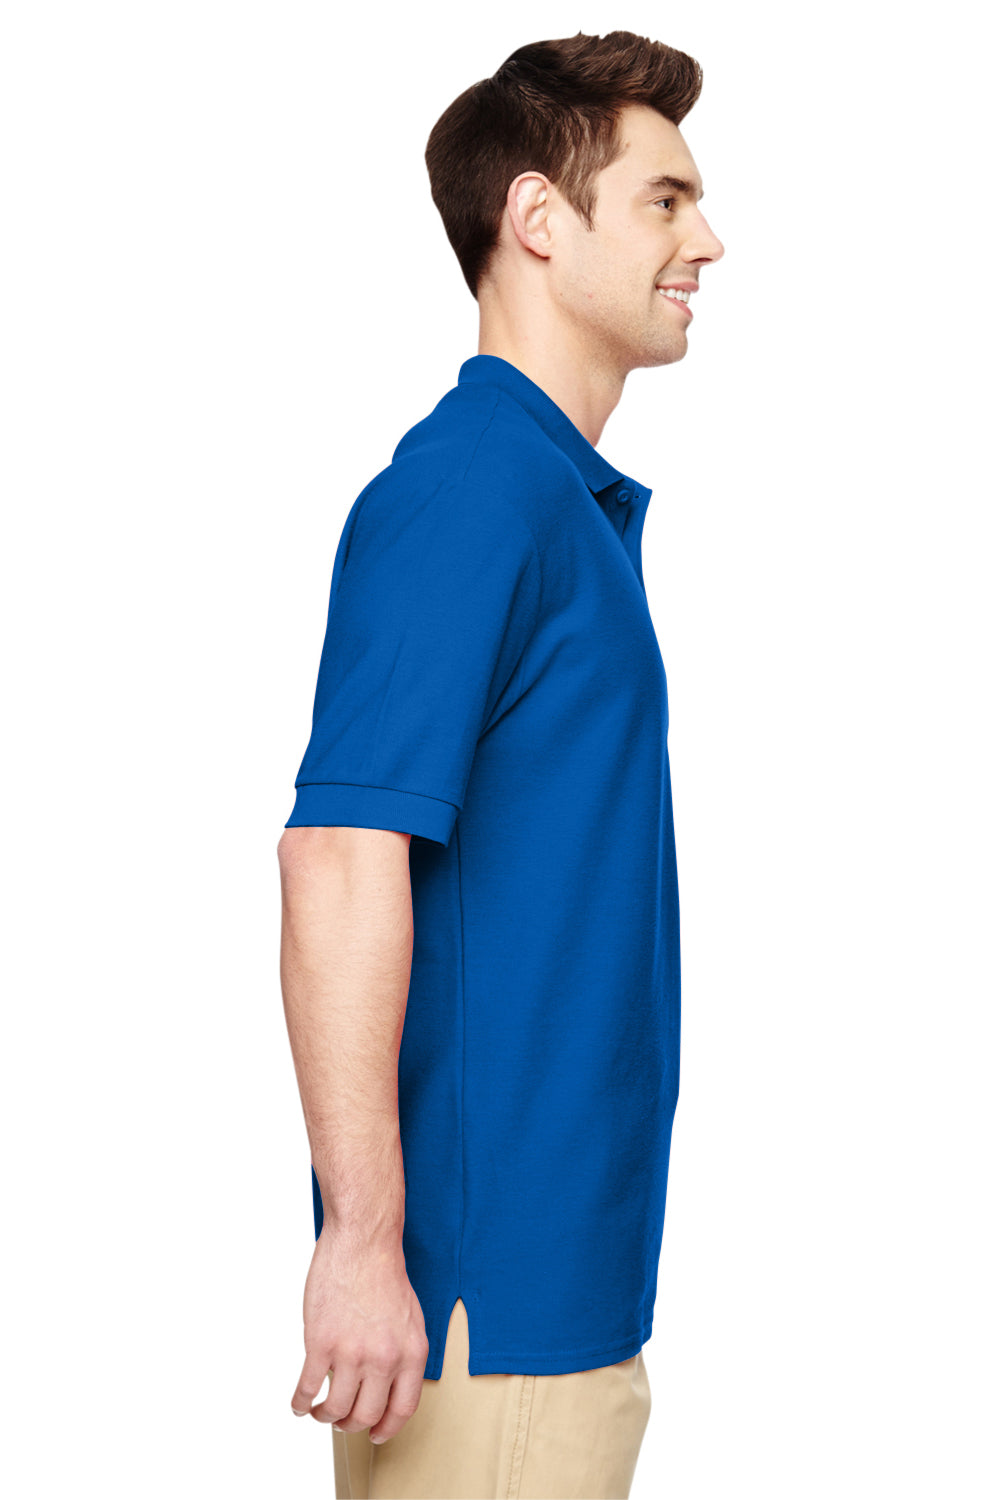 Gildan G828 Mens Short Sleeve Polo Shirt Royal Blue Side